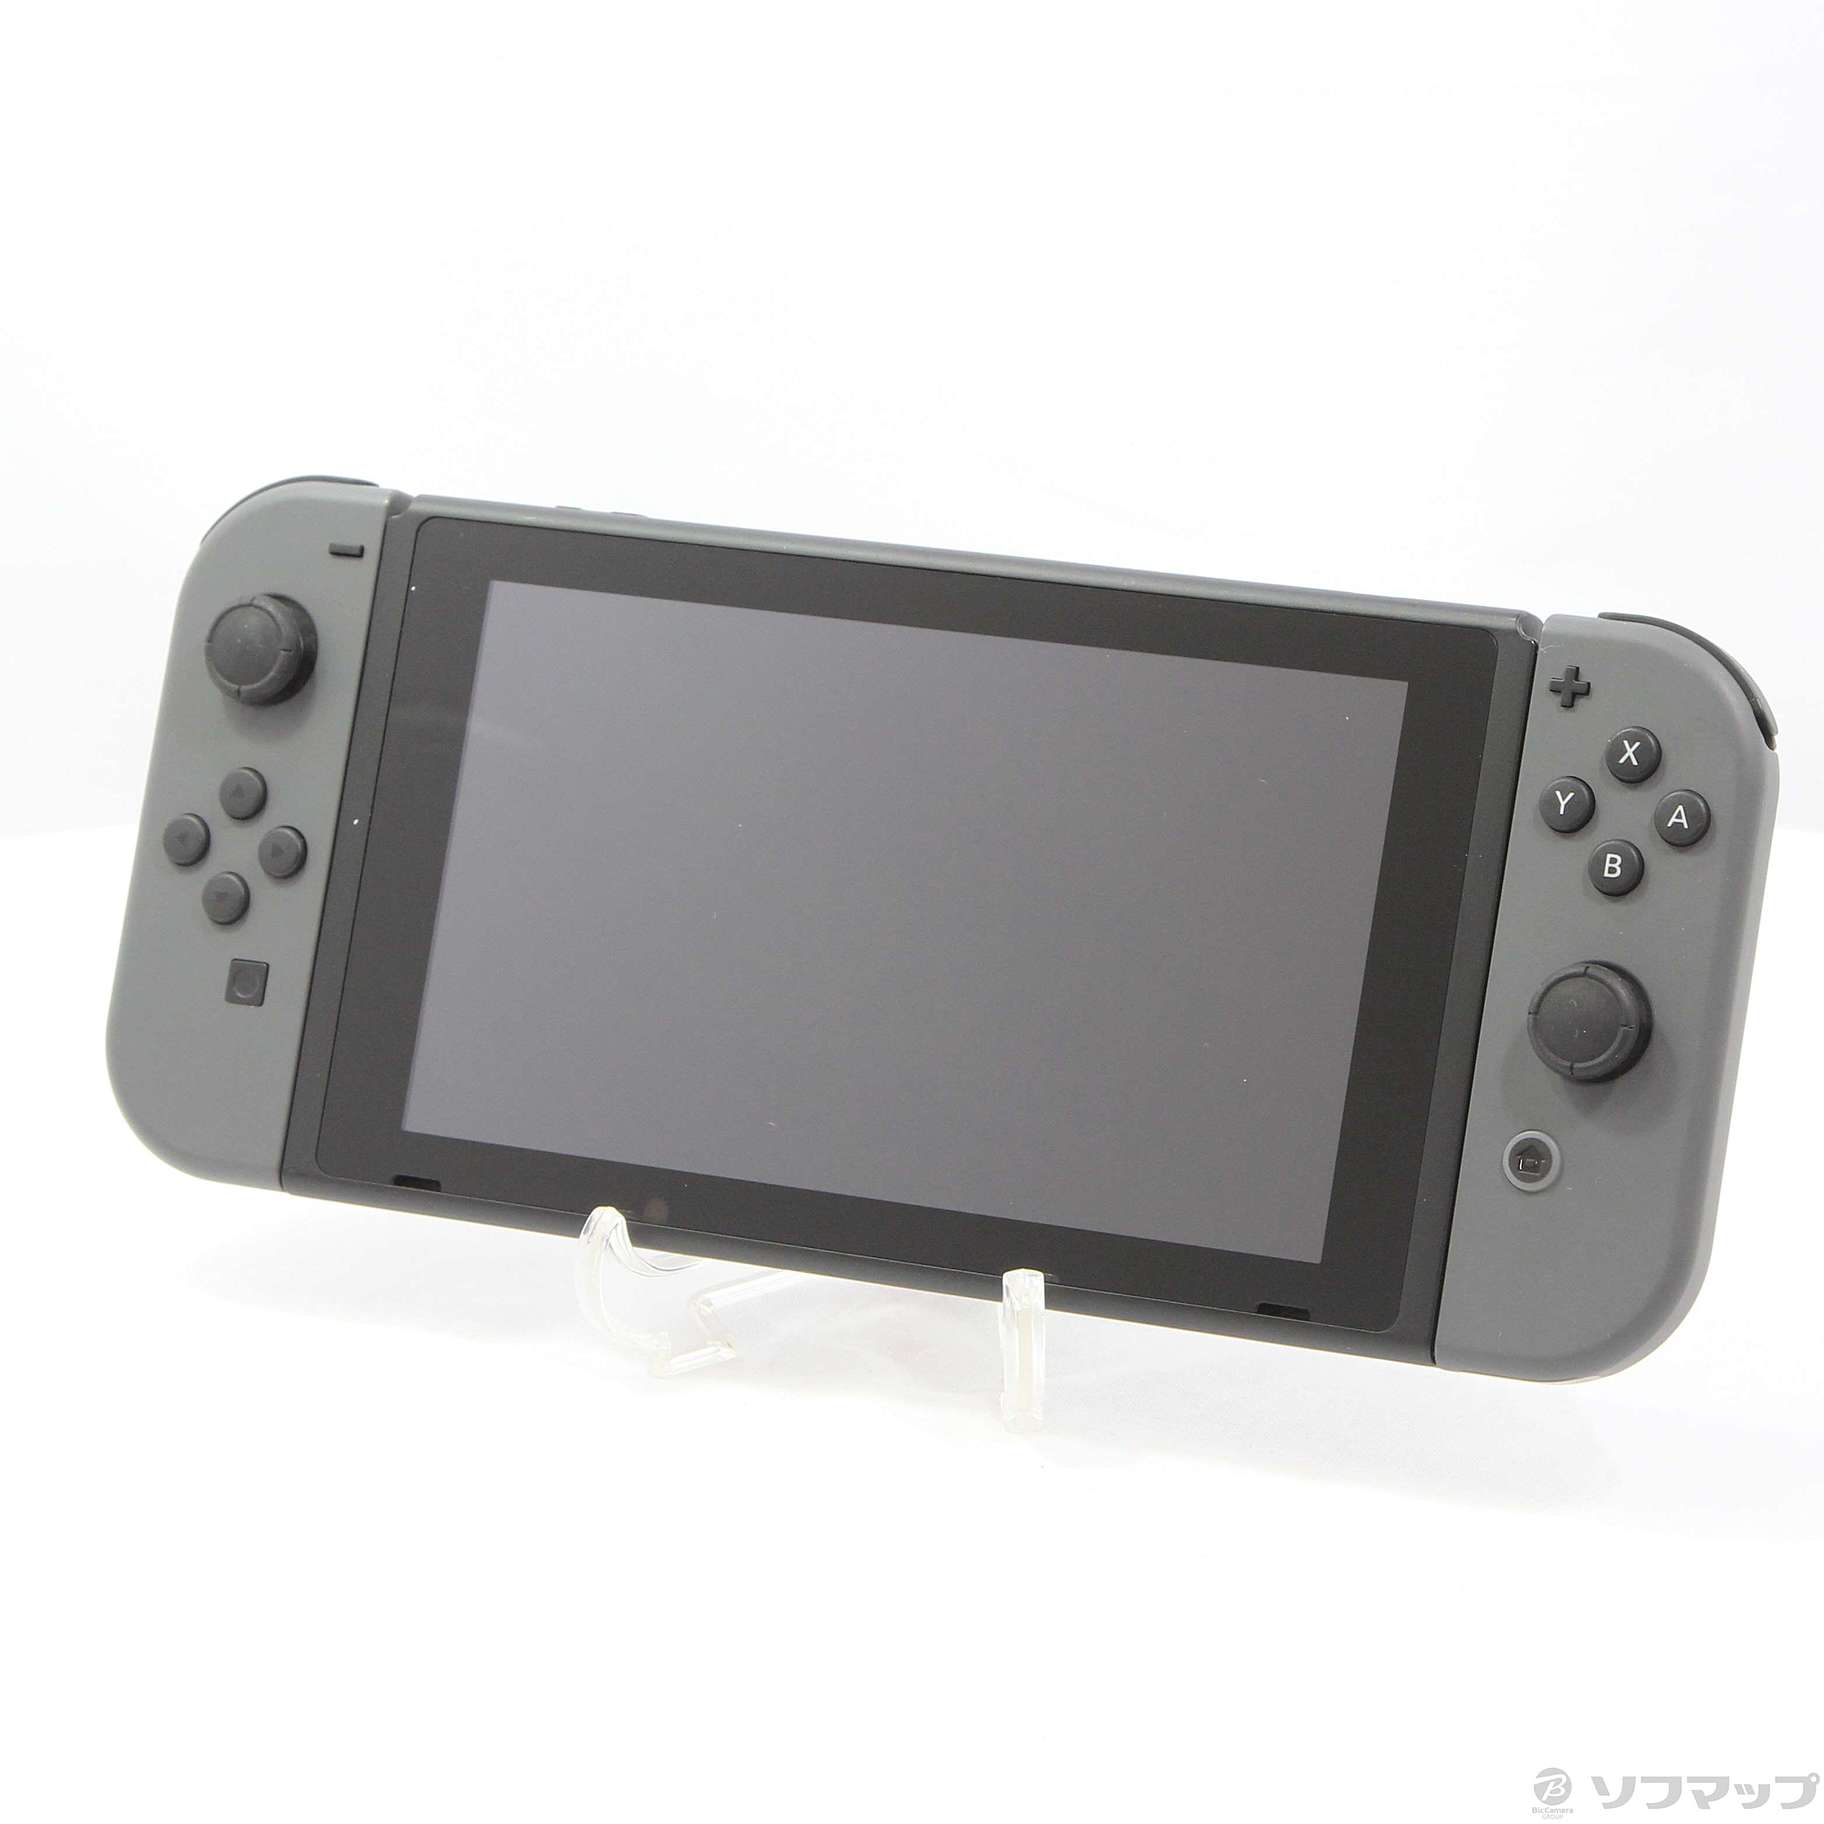 Nintendo Switch Joy-Con(L)/(R) グレーエンタメホビー